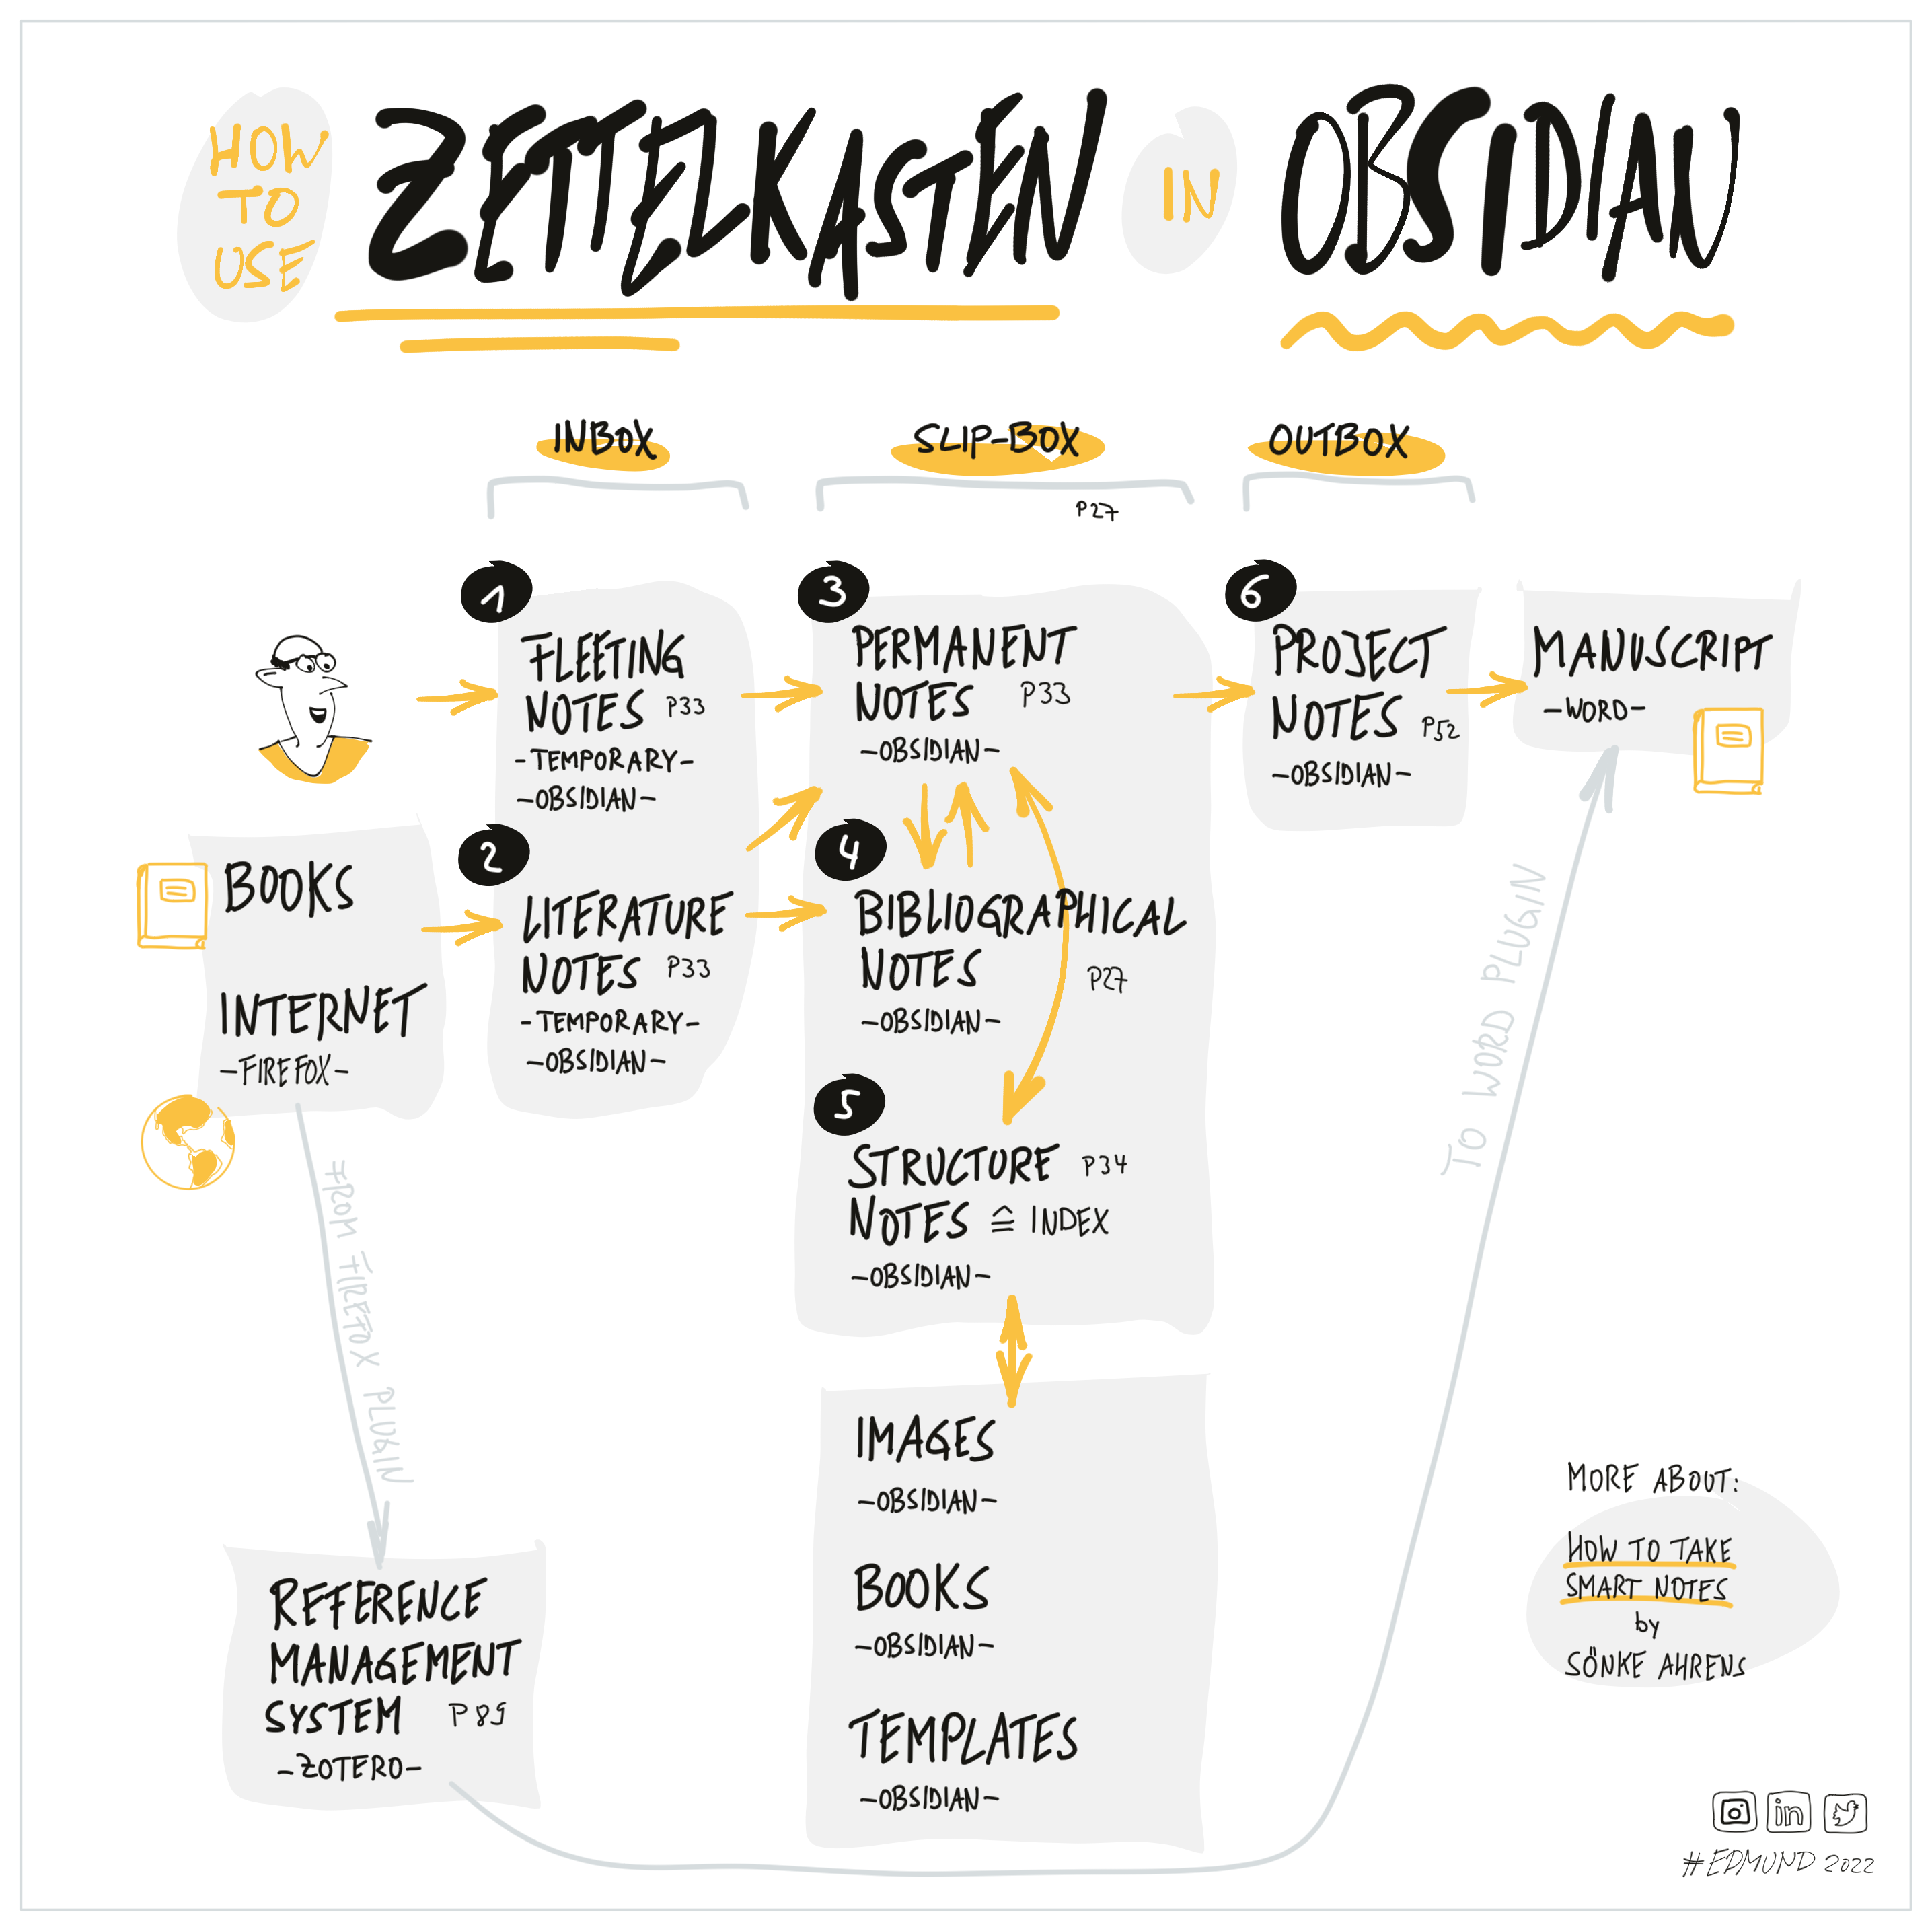 Not embedding  link? - Help - Obsidian Forum